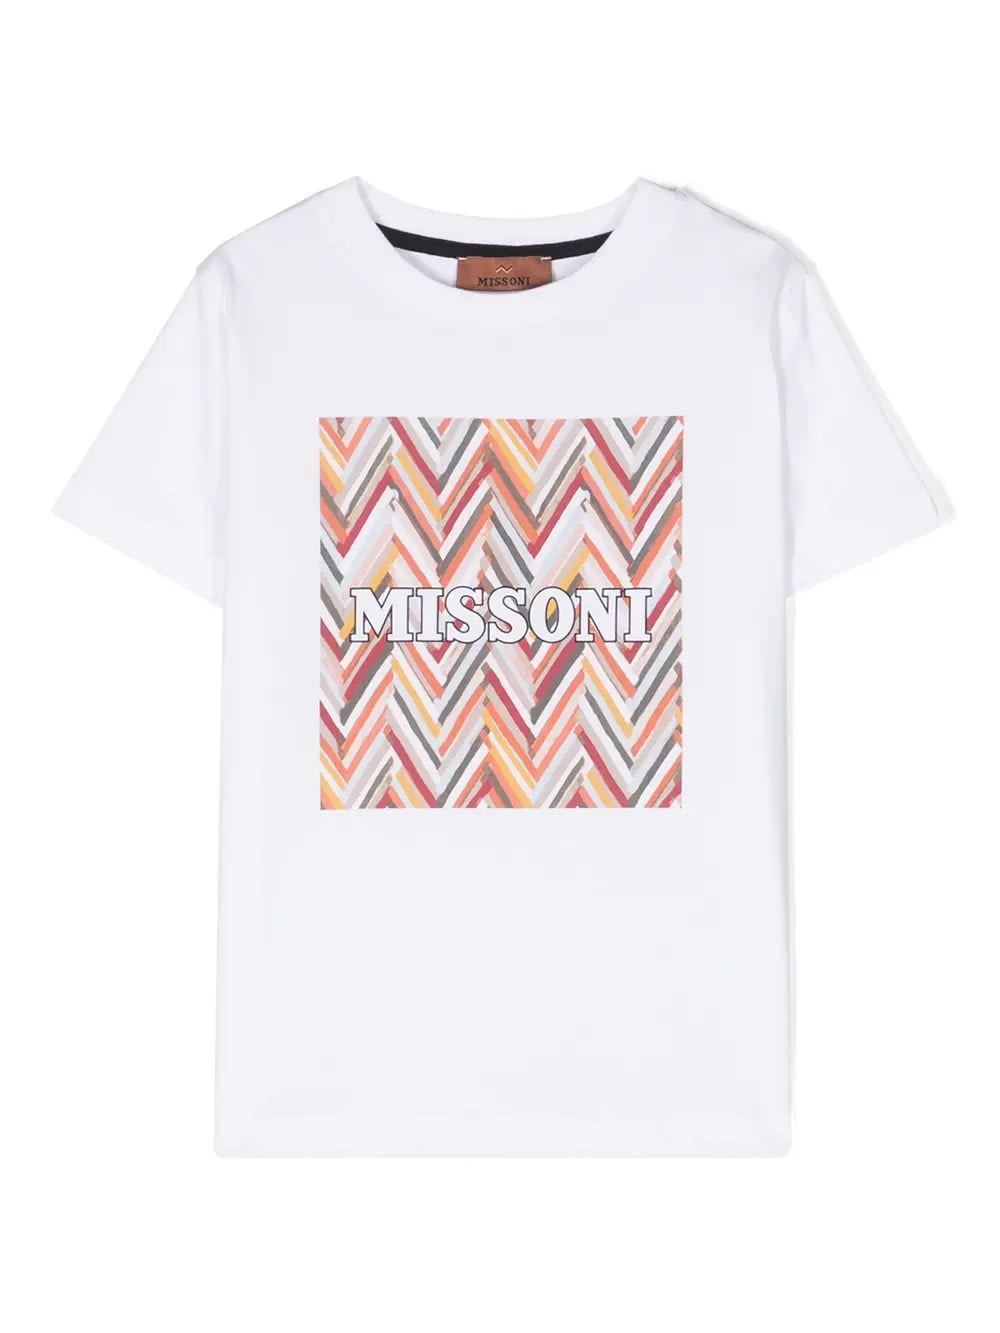 Shop Missoni White T-shirt With Orange Chevron Print